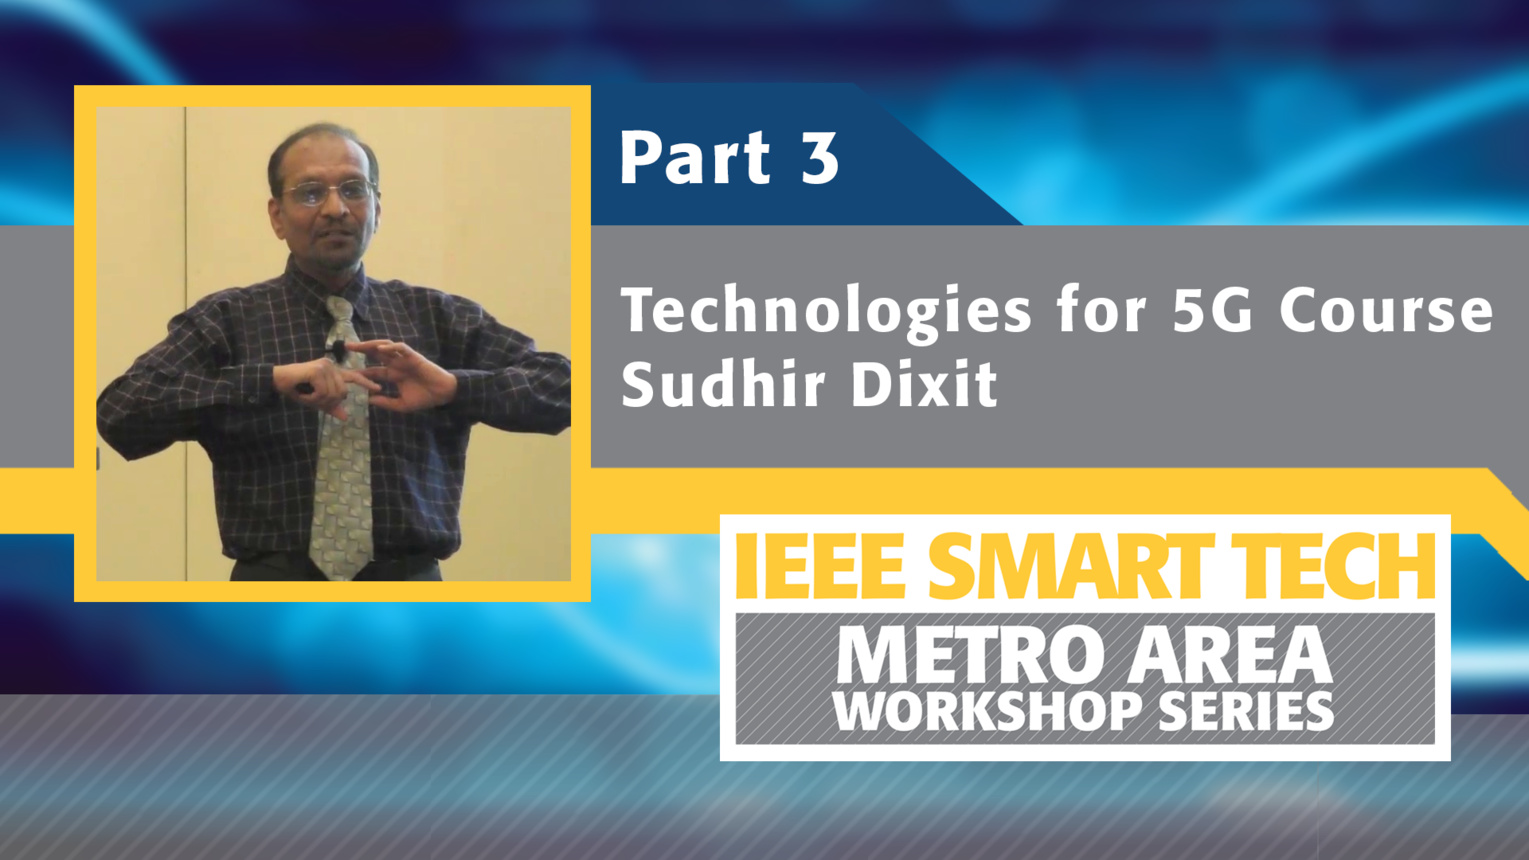 Technologies for 5G course, Part 3 - IEEE Smart Tech Workshop